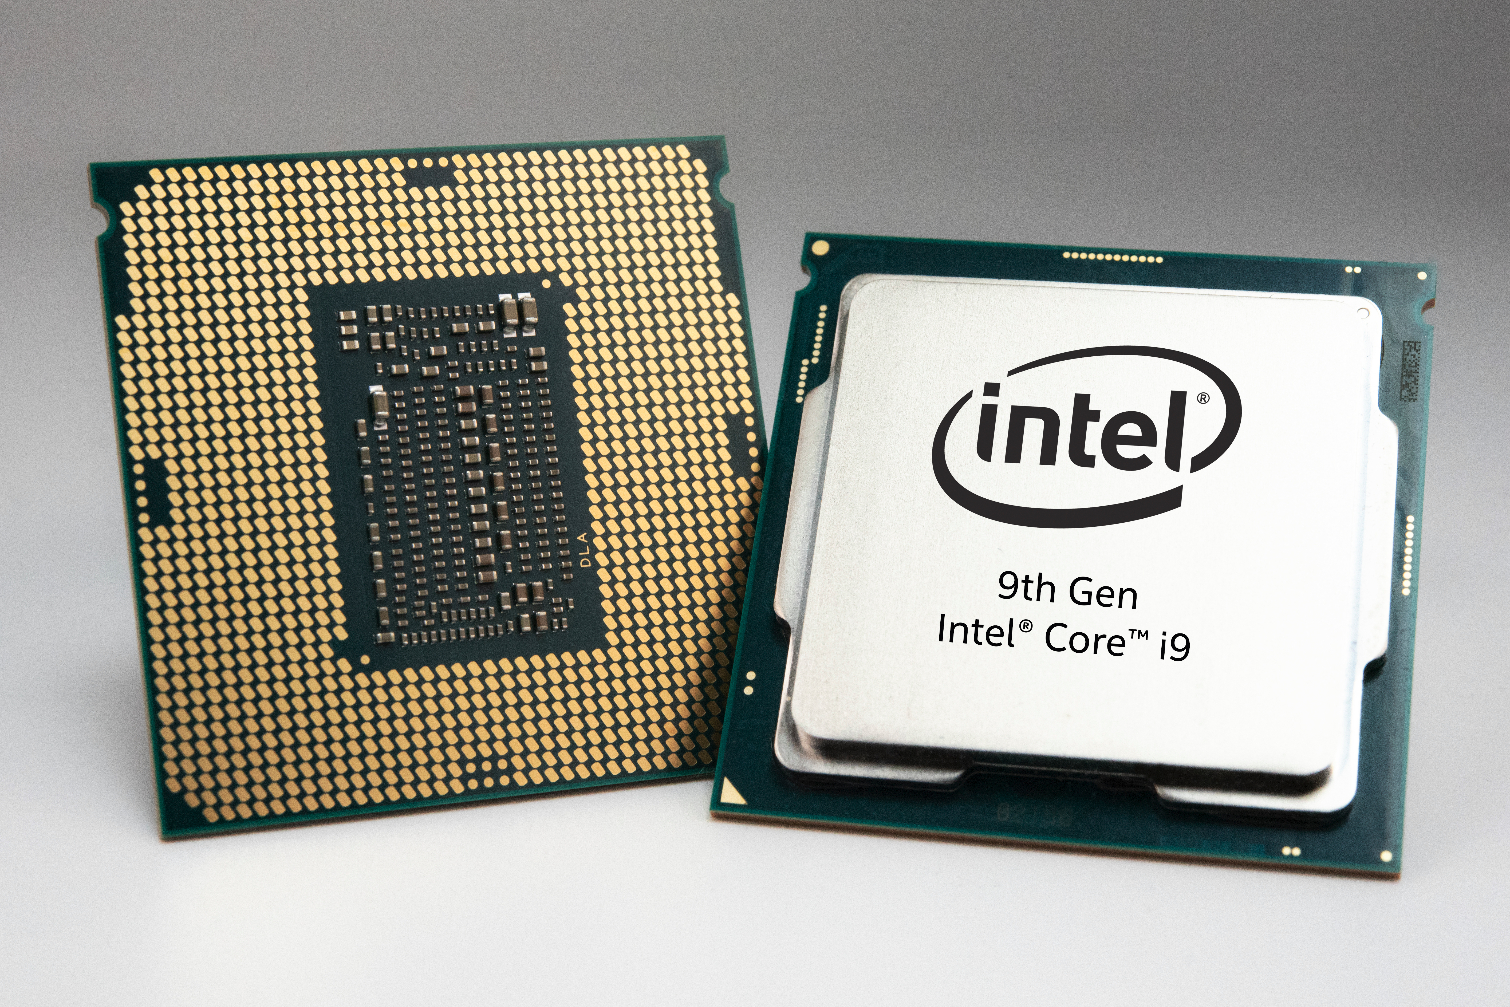 Vertrouwelijk gevolgtrekking tellen Intel Core i7-9700K 9th Gen CPU Review: Eight Cores And No Hyper-Threading  - Tom's Hardware | Tom's Hardware